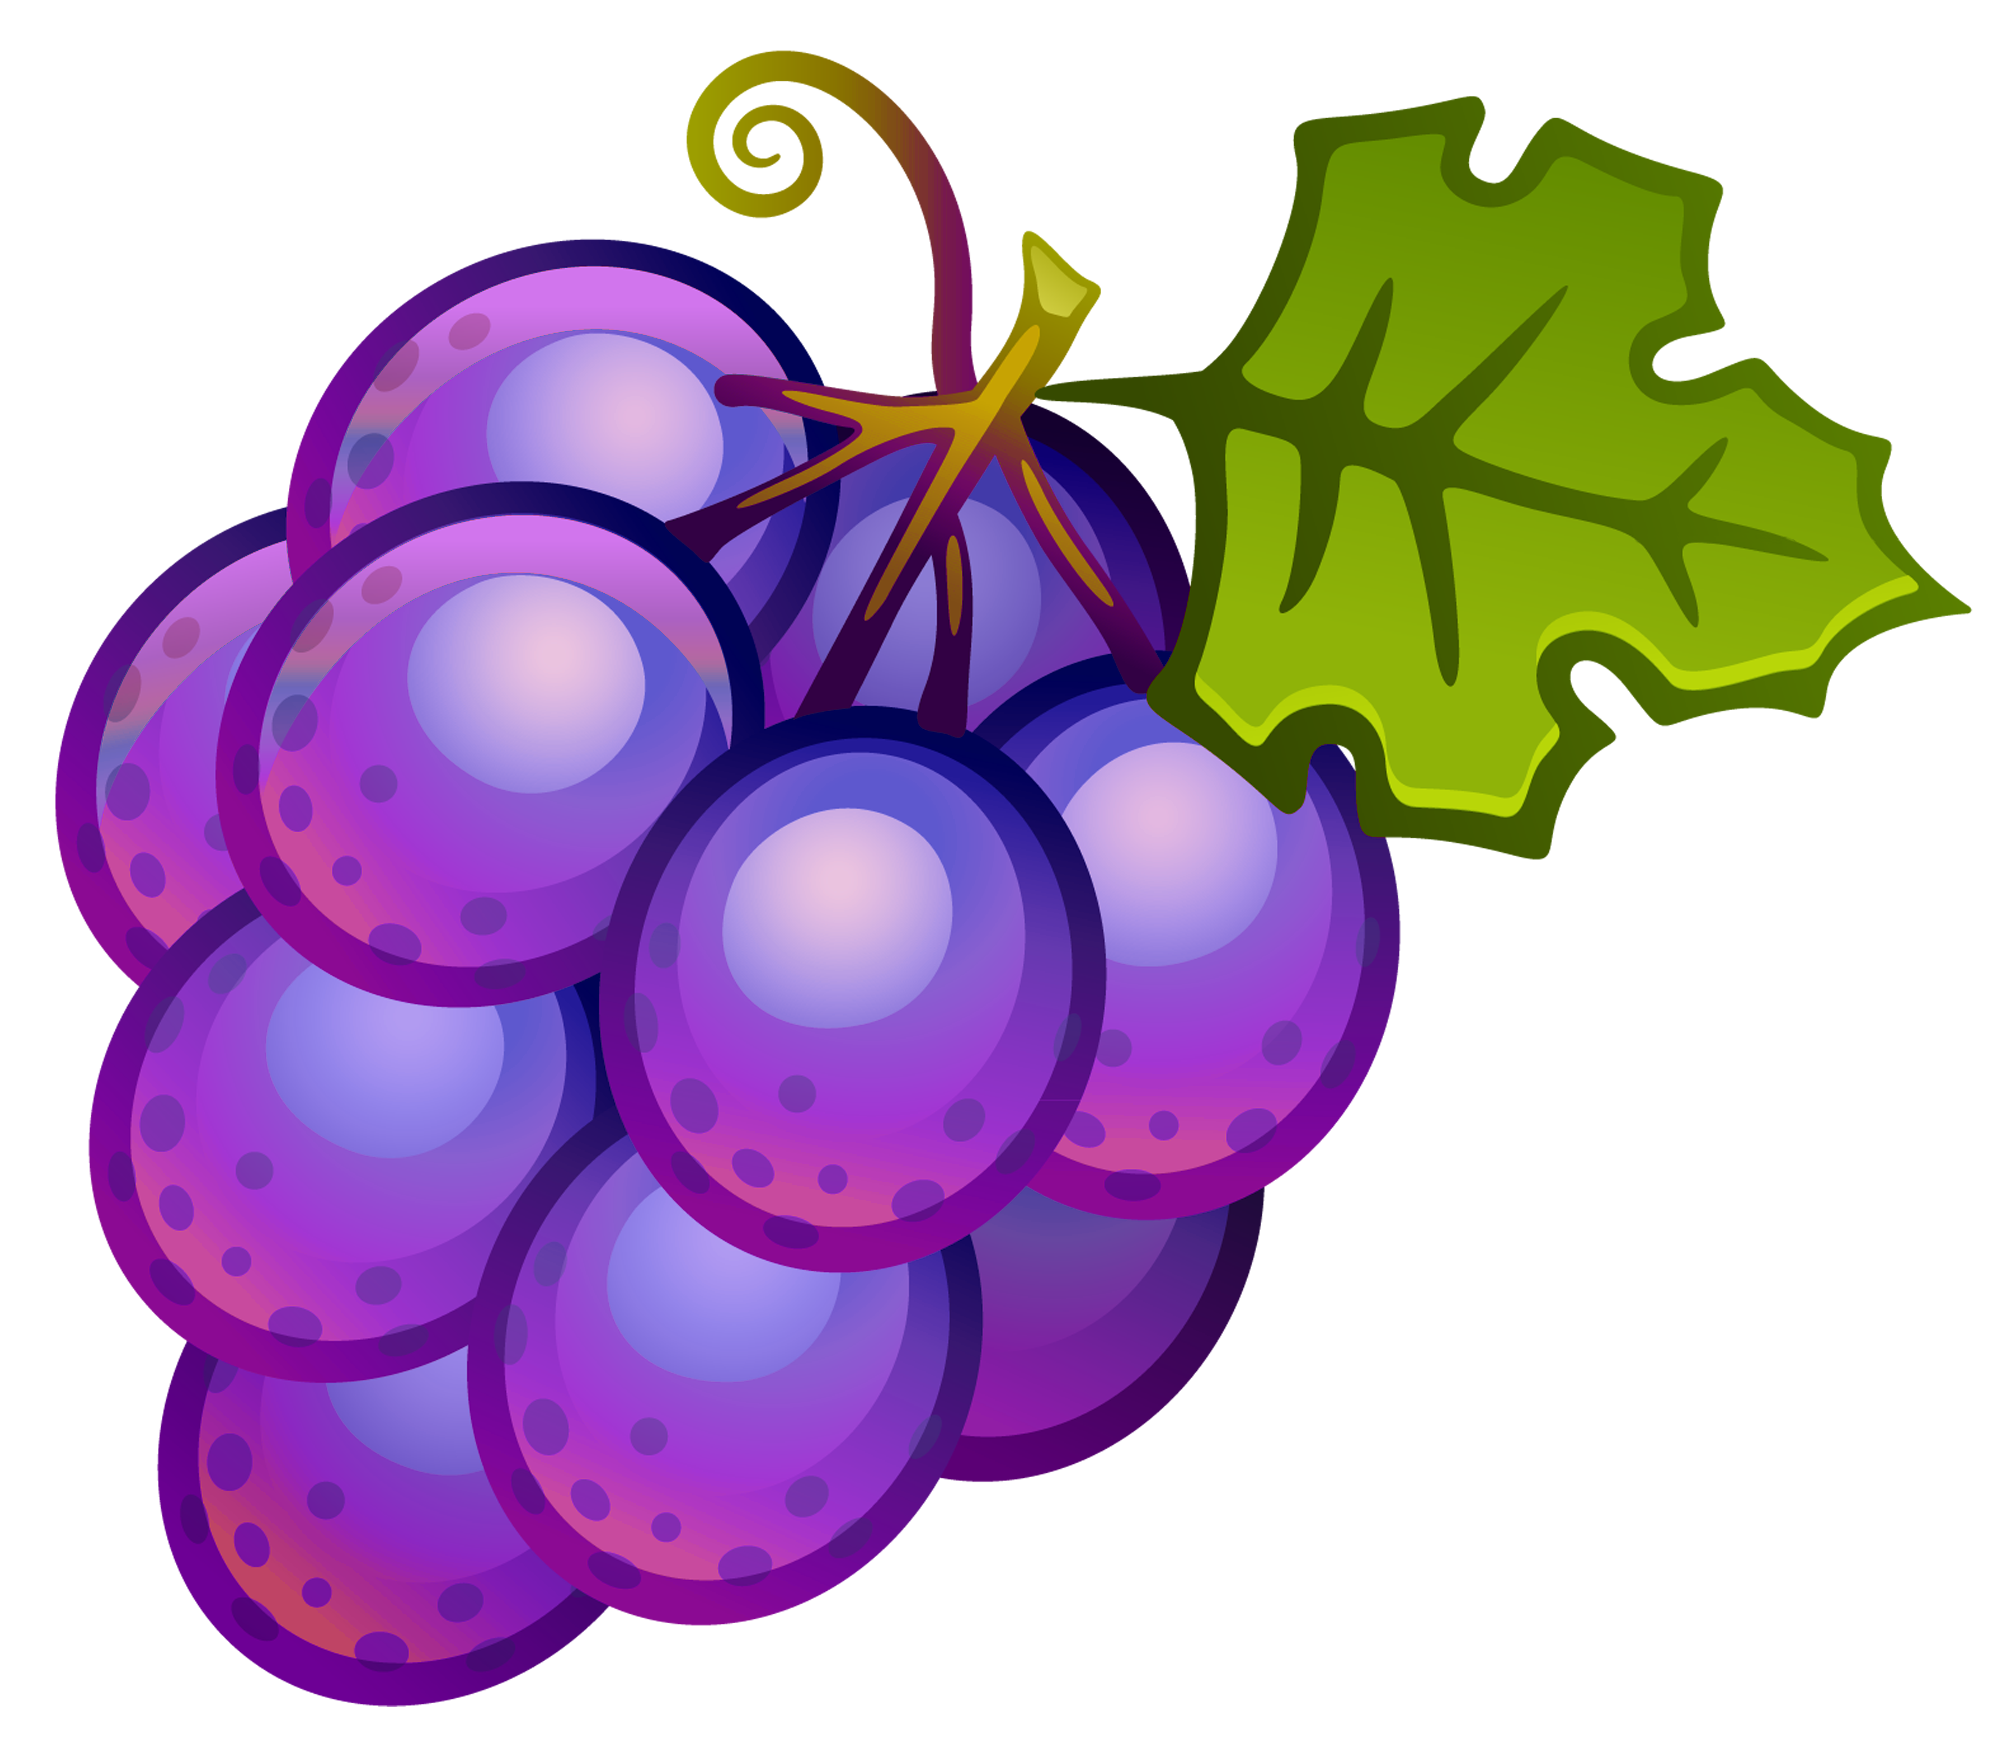 Grapes fruit clipart - ClipartFox